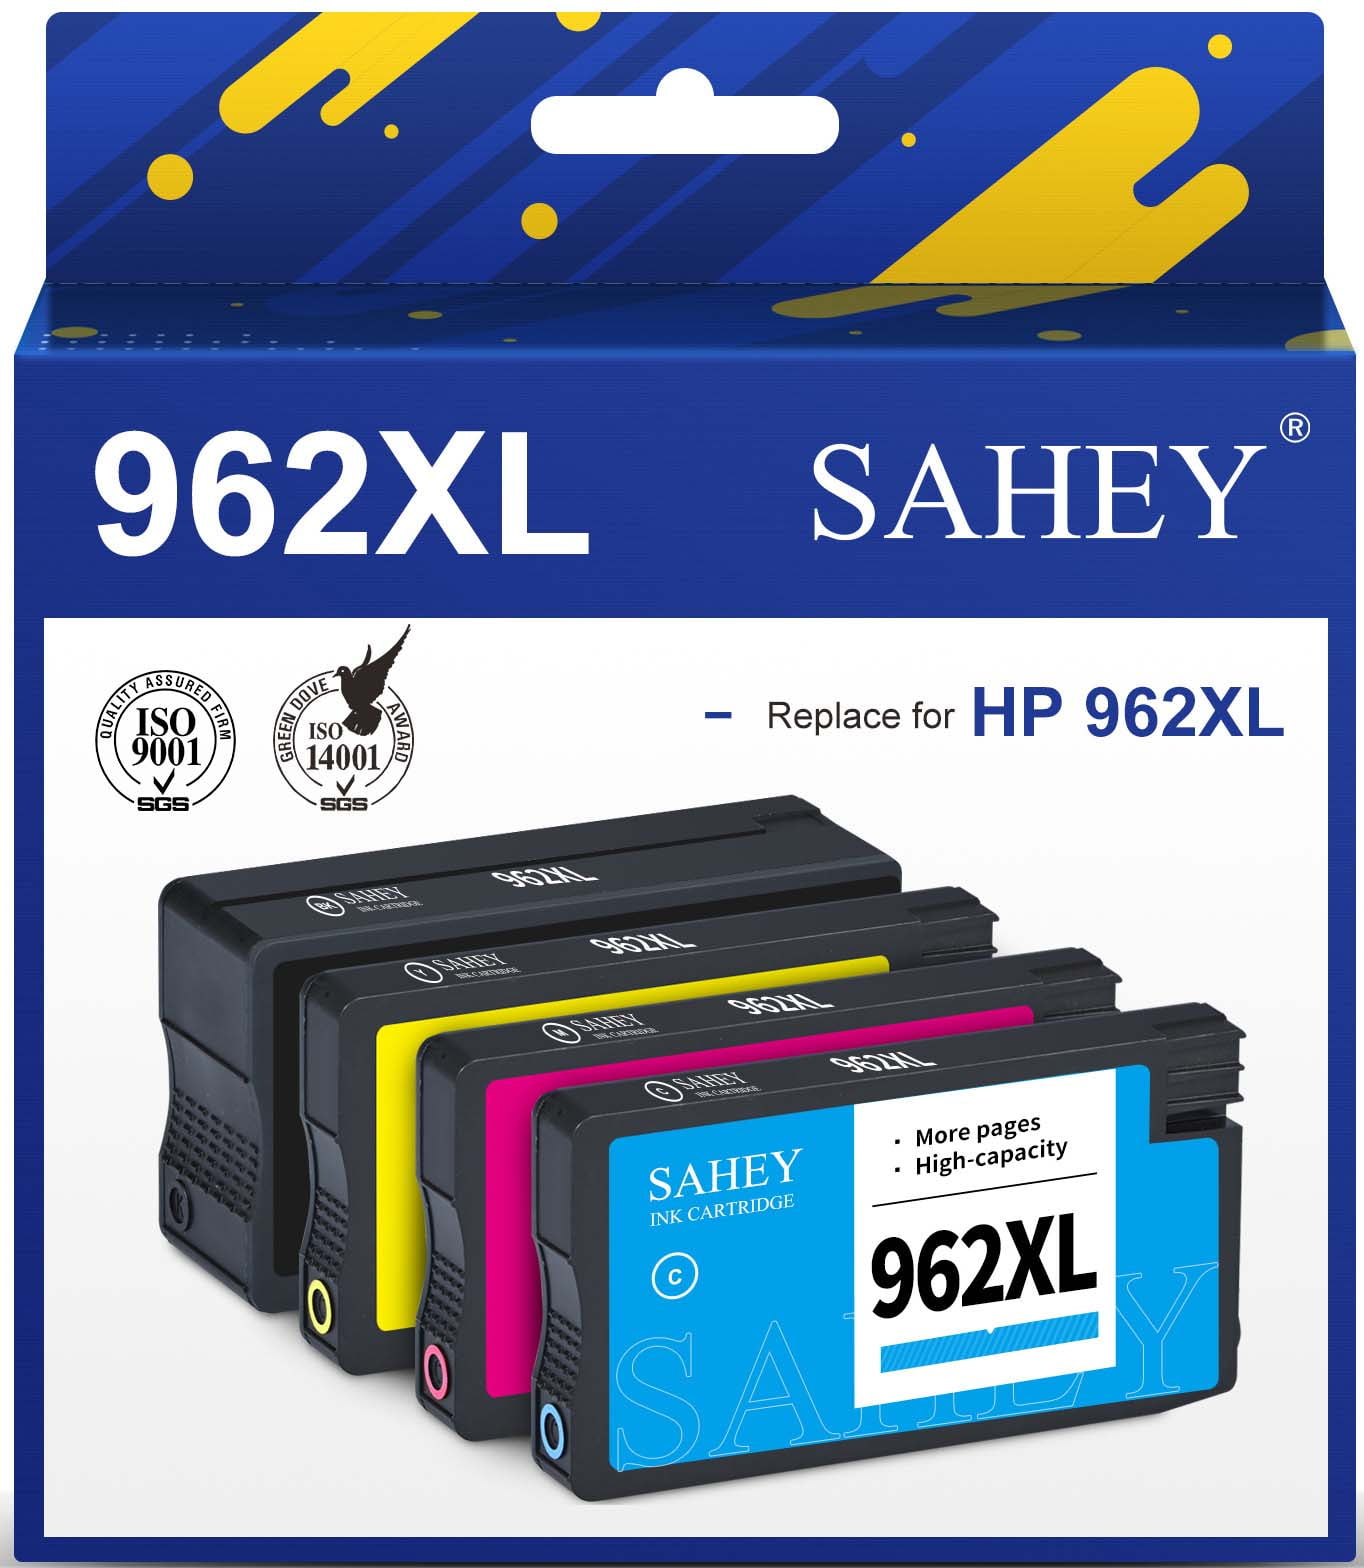 Terzijde bossen walvis 962XL Ink Cartridges for HP 962XL Ink Cartridge with HP Officejet Pro 9010  9012 9015 9015 9018 9025 9020 9026 9028 (1 Black, 1 Cyan, 1 Magenta, 1  Yellow) - Walmart.com